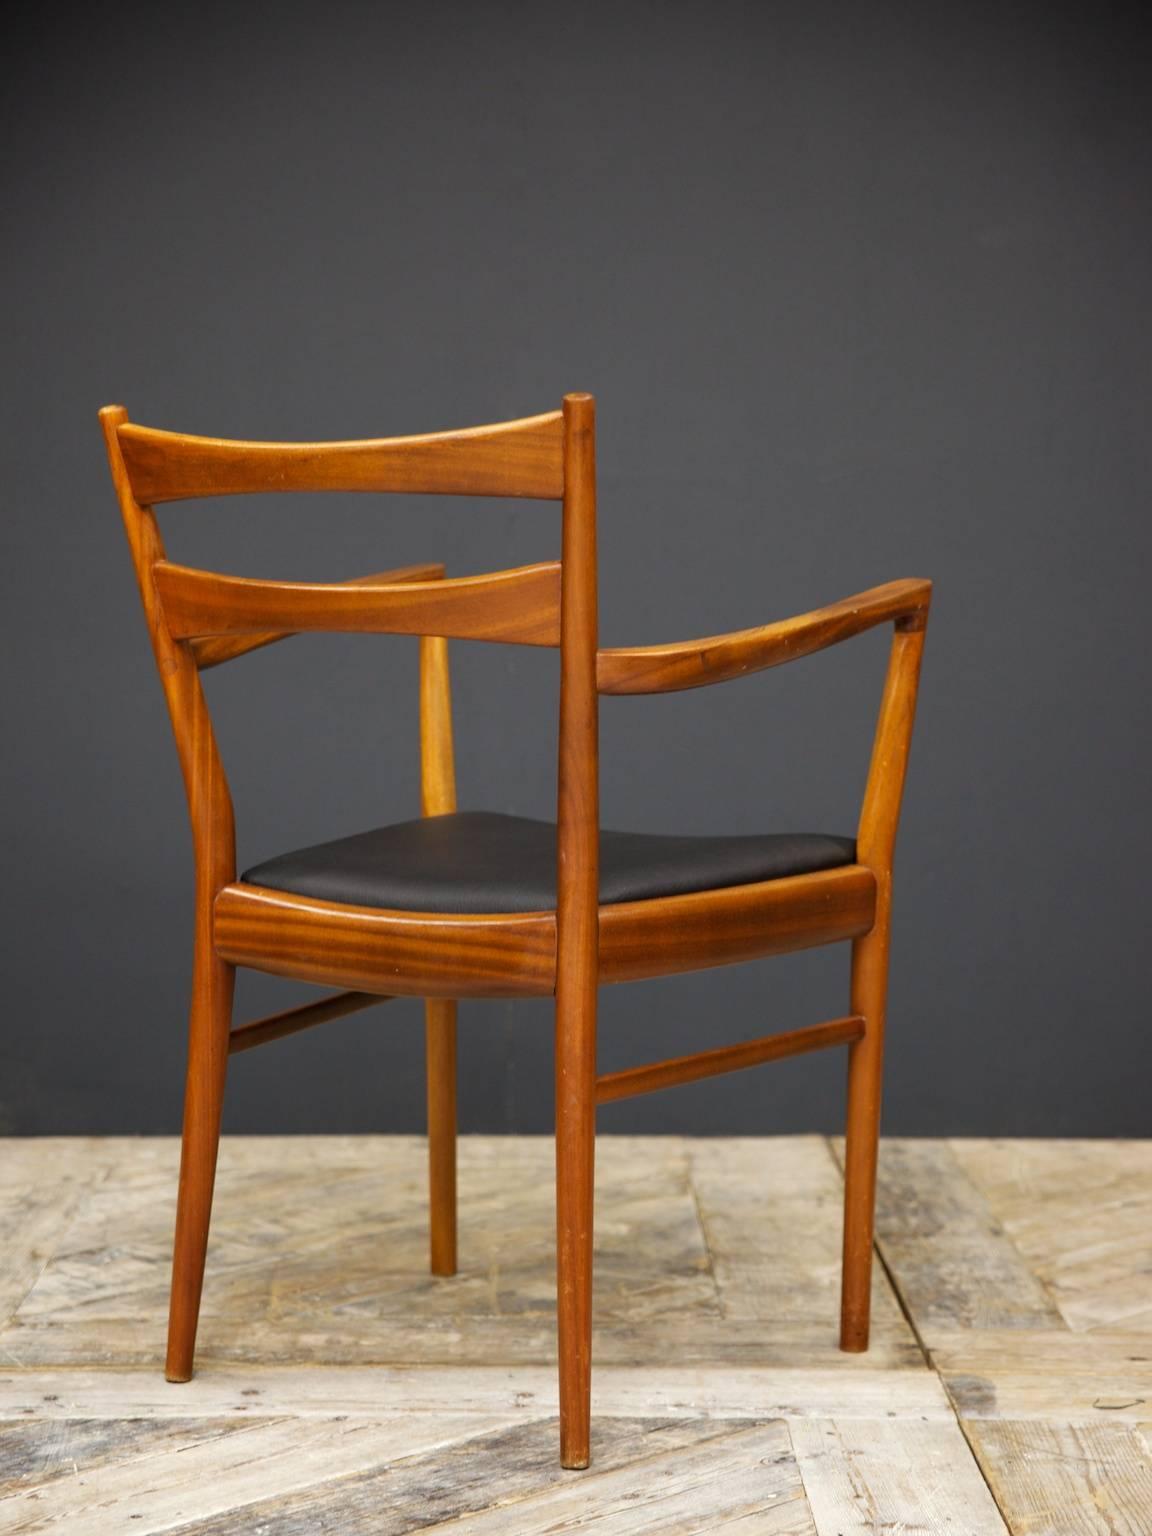 Mid-20th Century Beithcraft Chairs